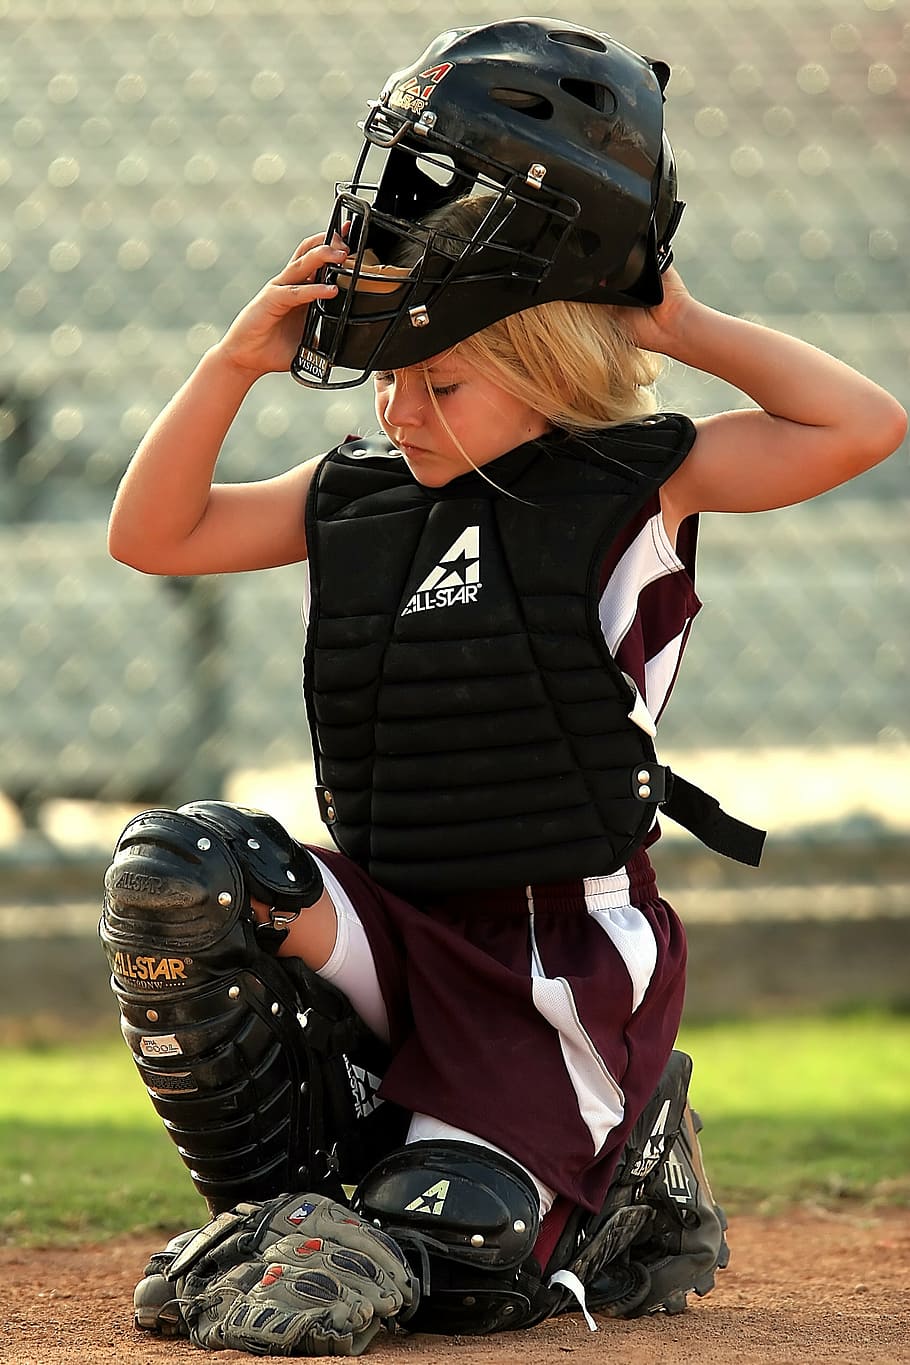 HD wallpaper: softball, player, catcher, female, helmet, game, competition  | Wallpaper Flare